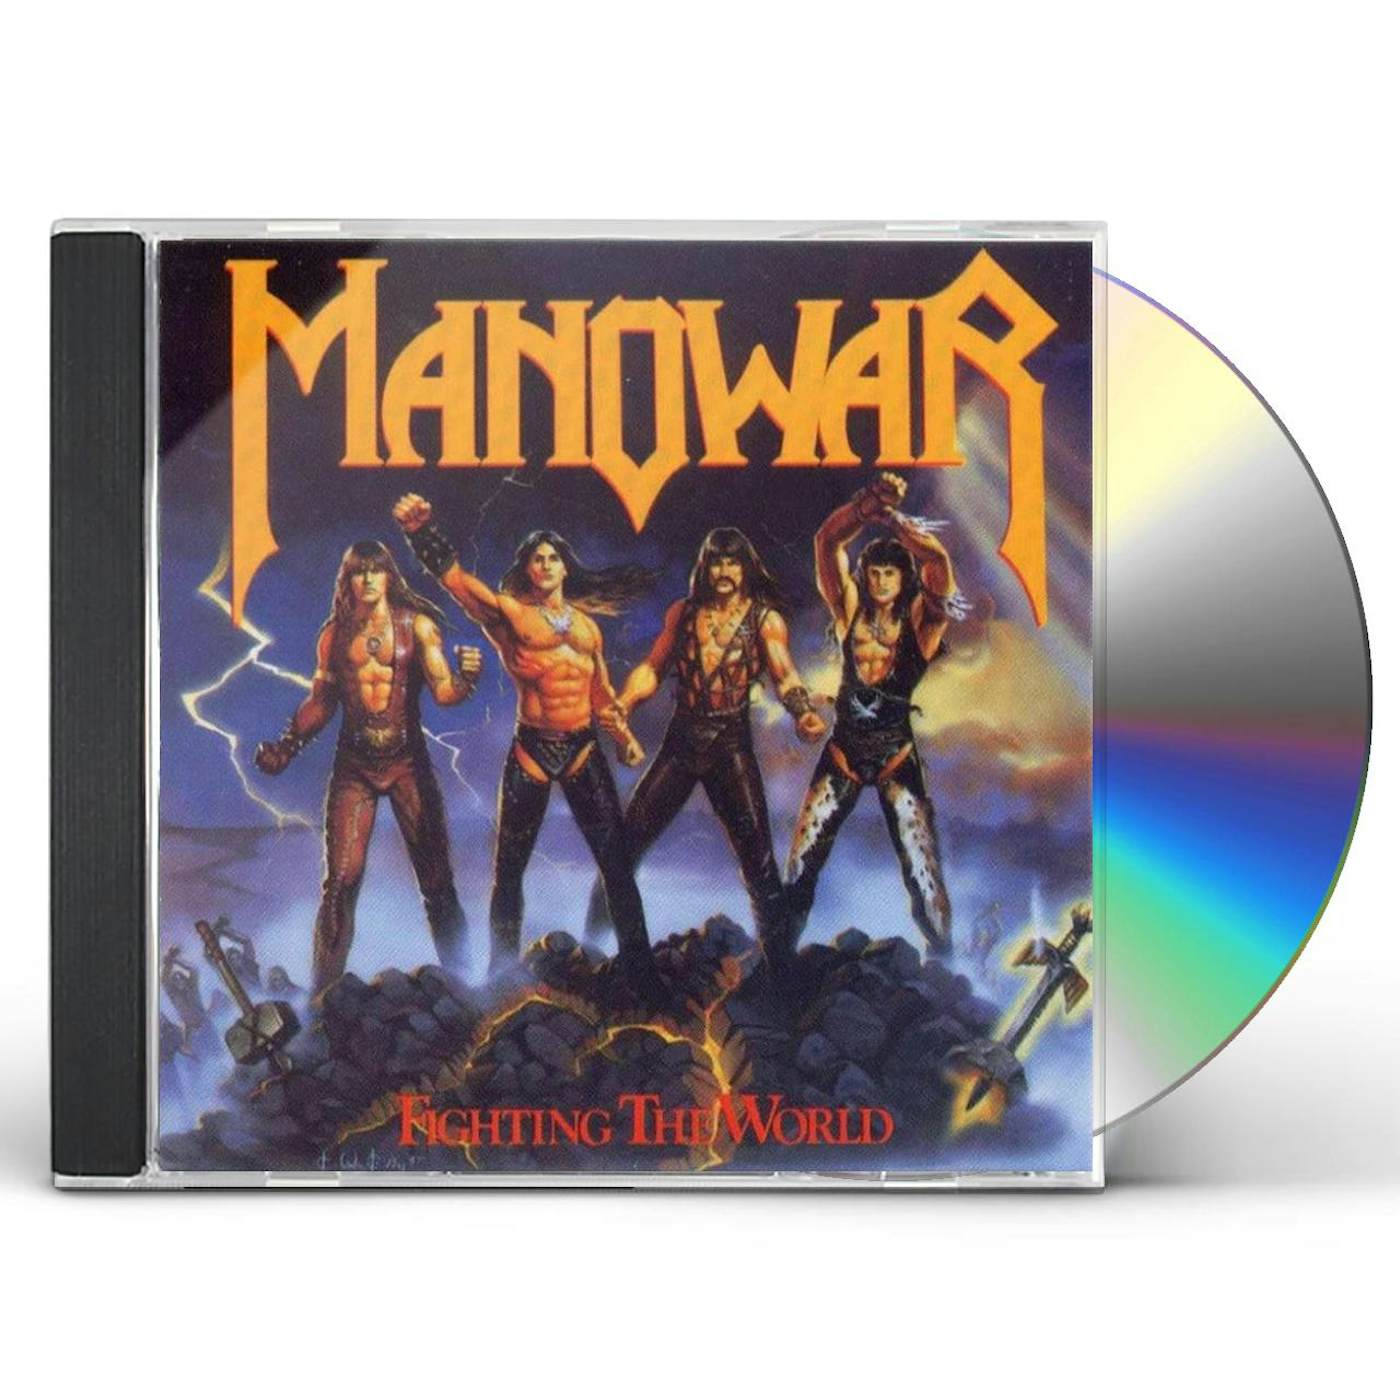 Manowar FIGHTING THE WORLD CD